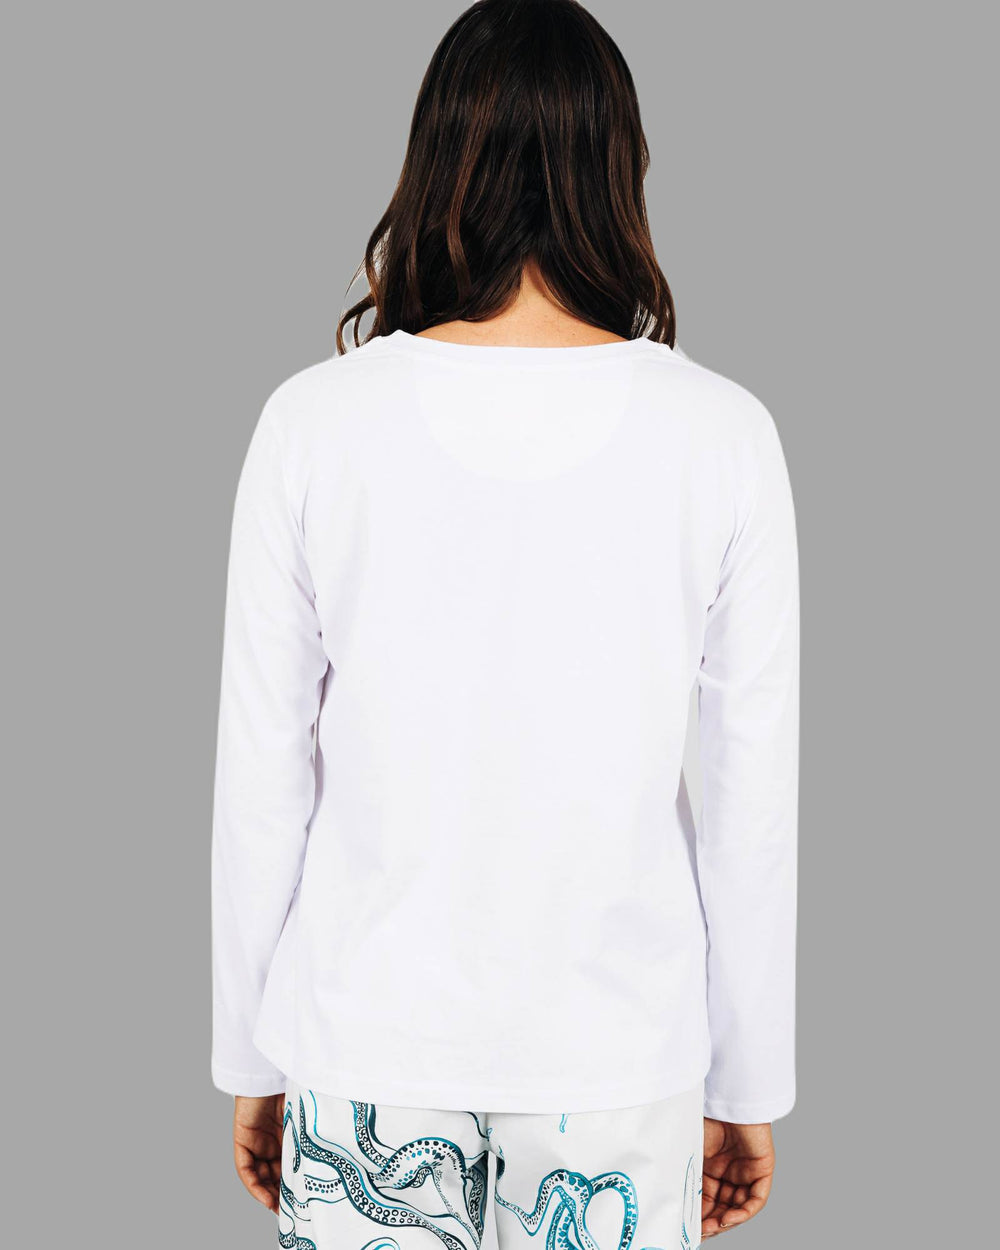 LUXUR Women Long Sleeve Sweatshirt Casual Holiday T-shirt White XL